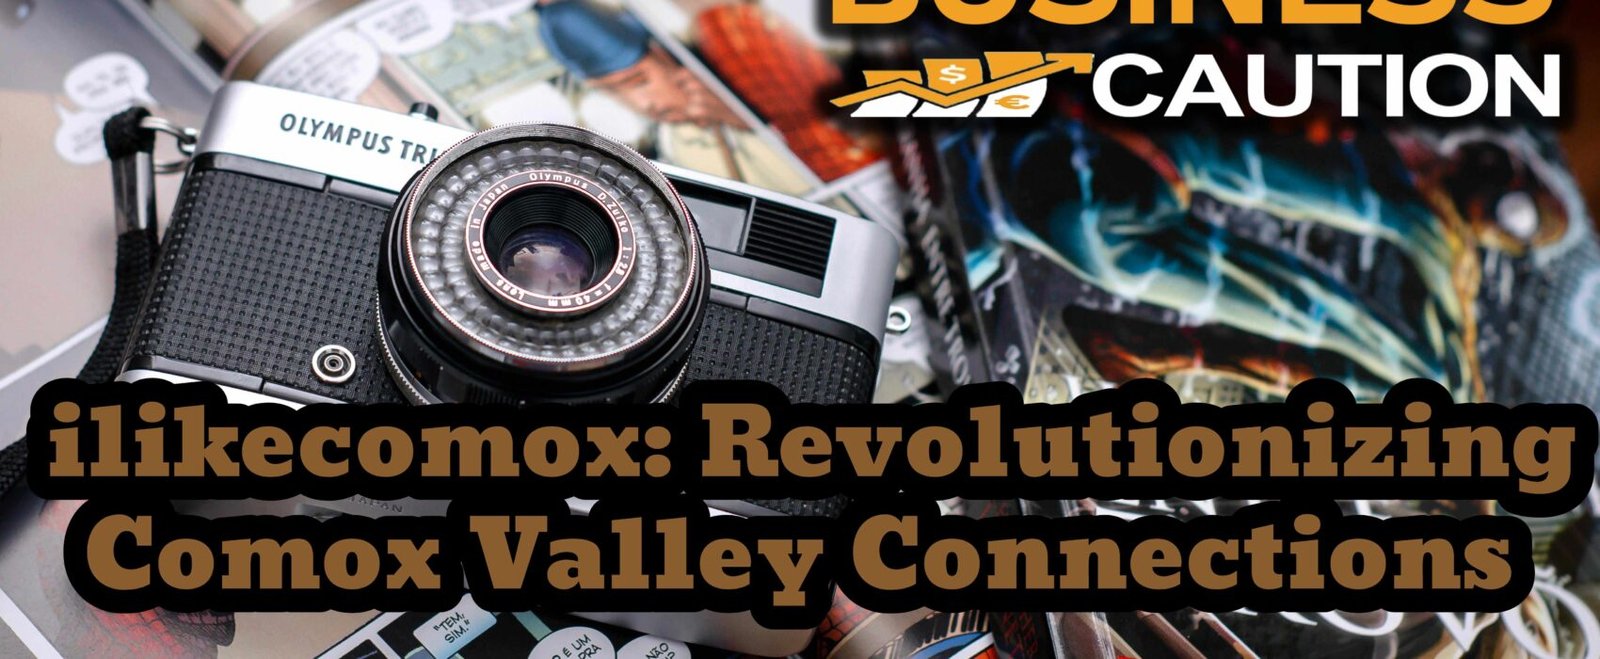 ilikecomox: Revolutionizing Comox Valley Connections